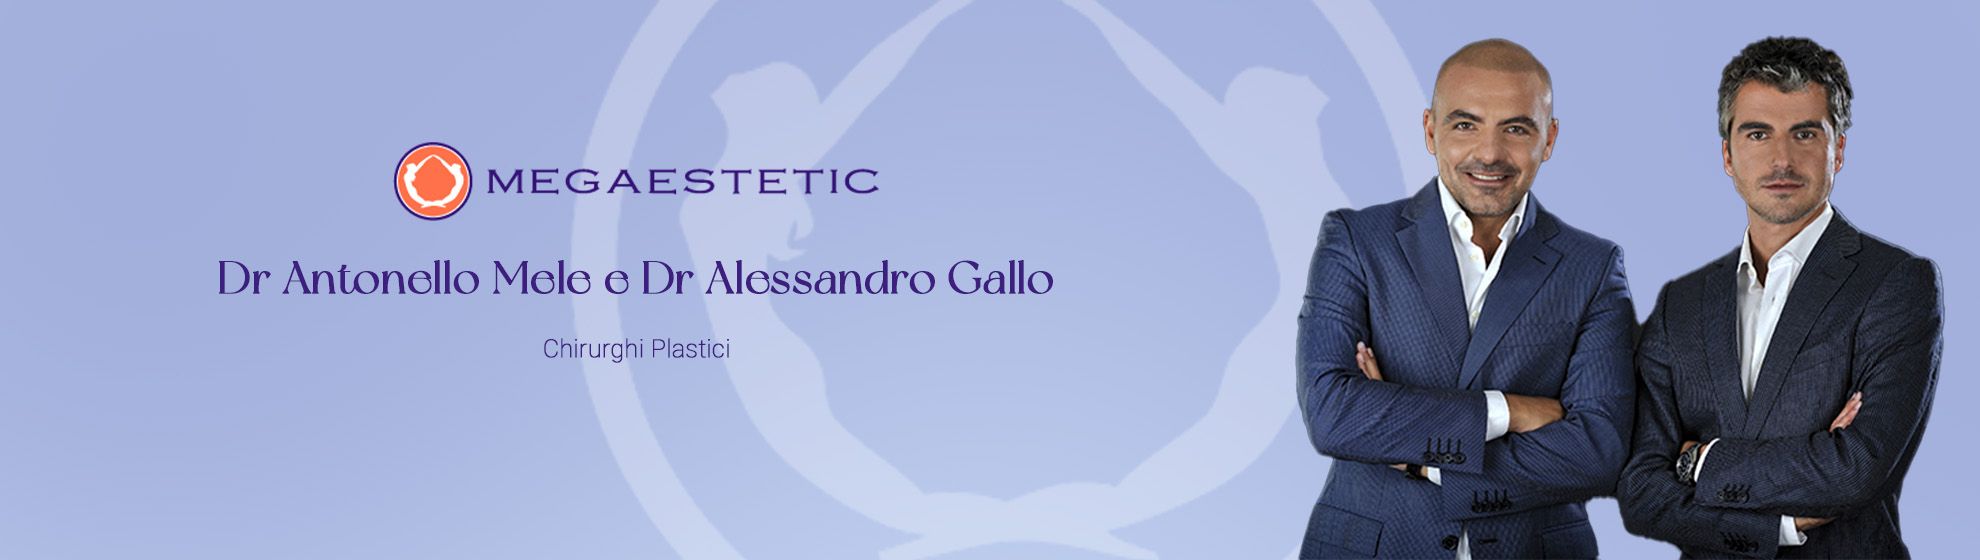 Megaestetic - Dott. Antonello Mele e Dott. Alessandro Gallo